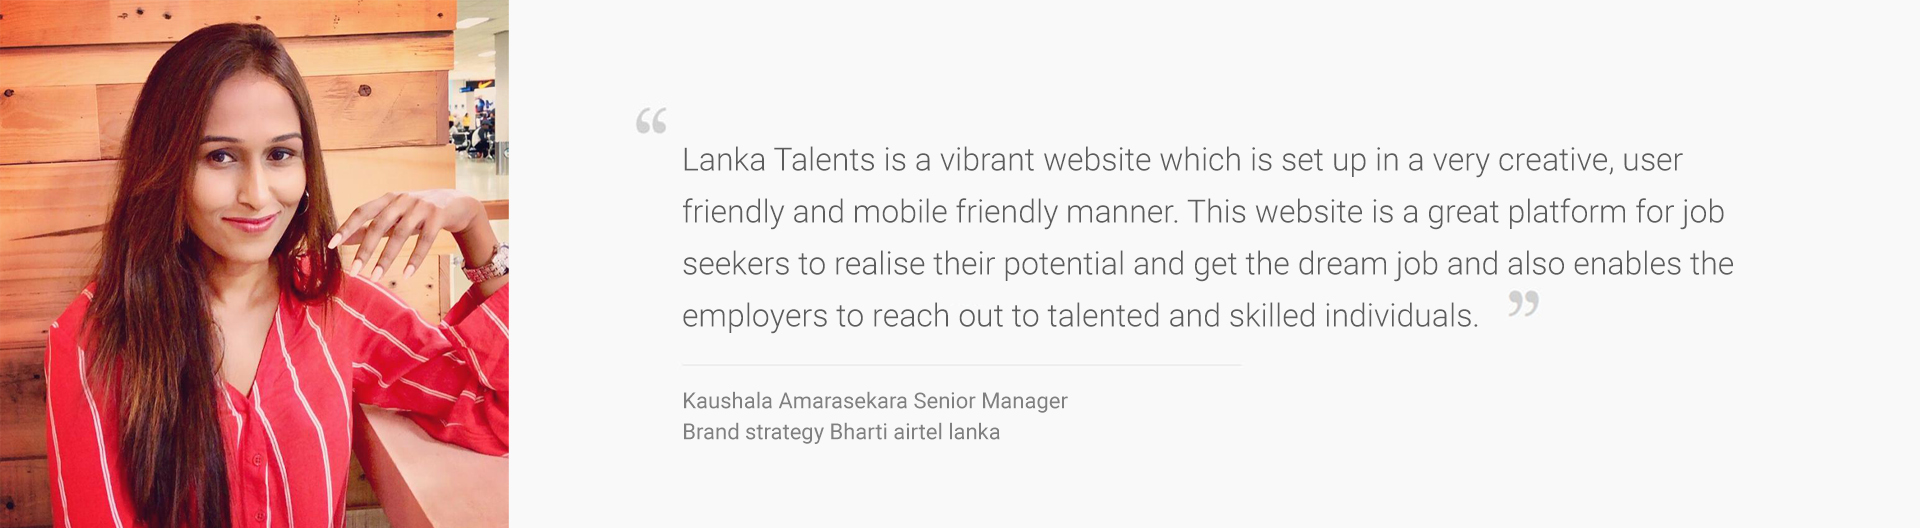 A client comments on New Job vacancies on Lanka talents